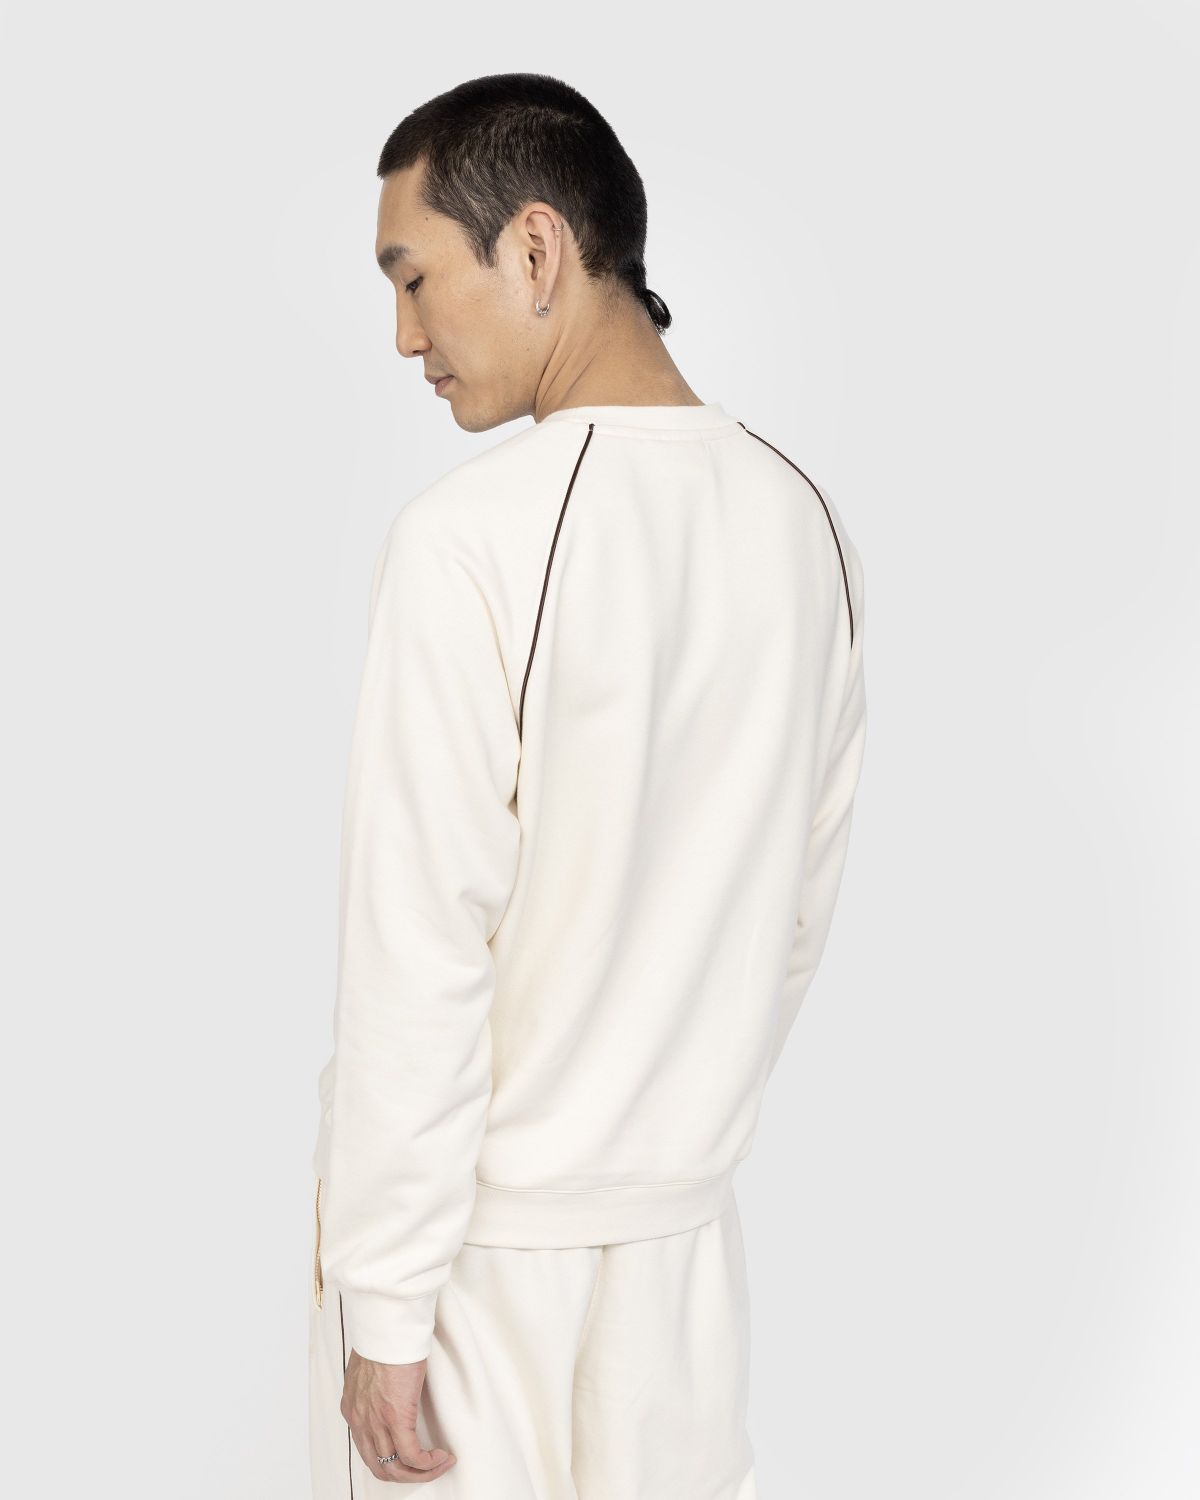 Adidas x Wales Bonner – Crewneck Sweater Wonder White - Knitwear - Beige - Image 3